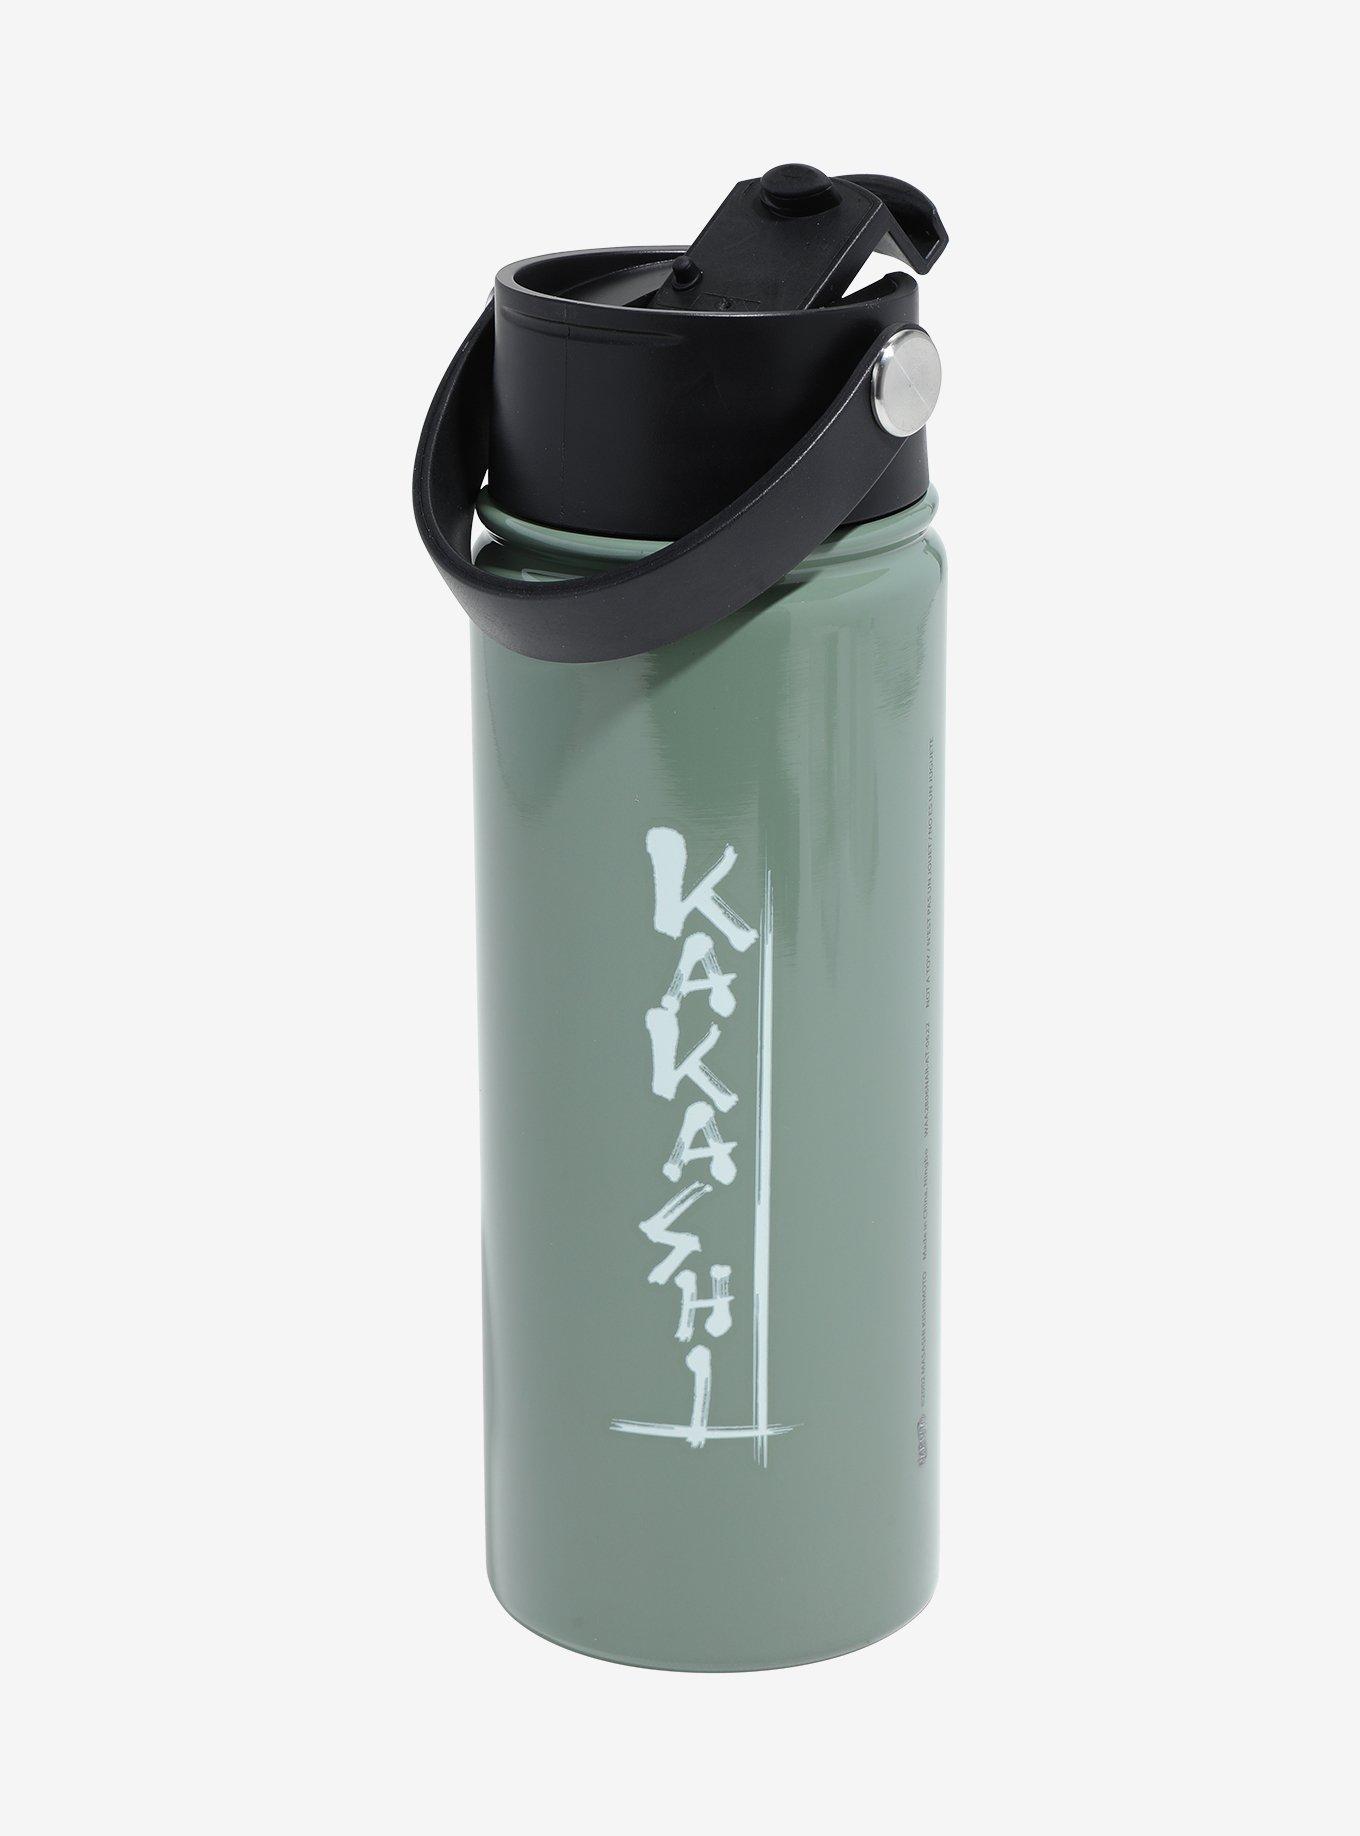 Naruto Shippuden Kakashi Stainless Steel Water Bottle